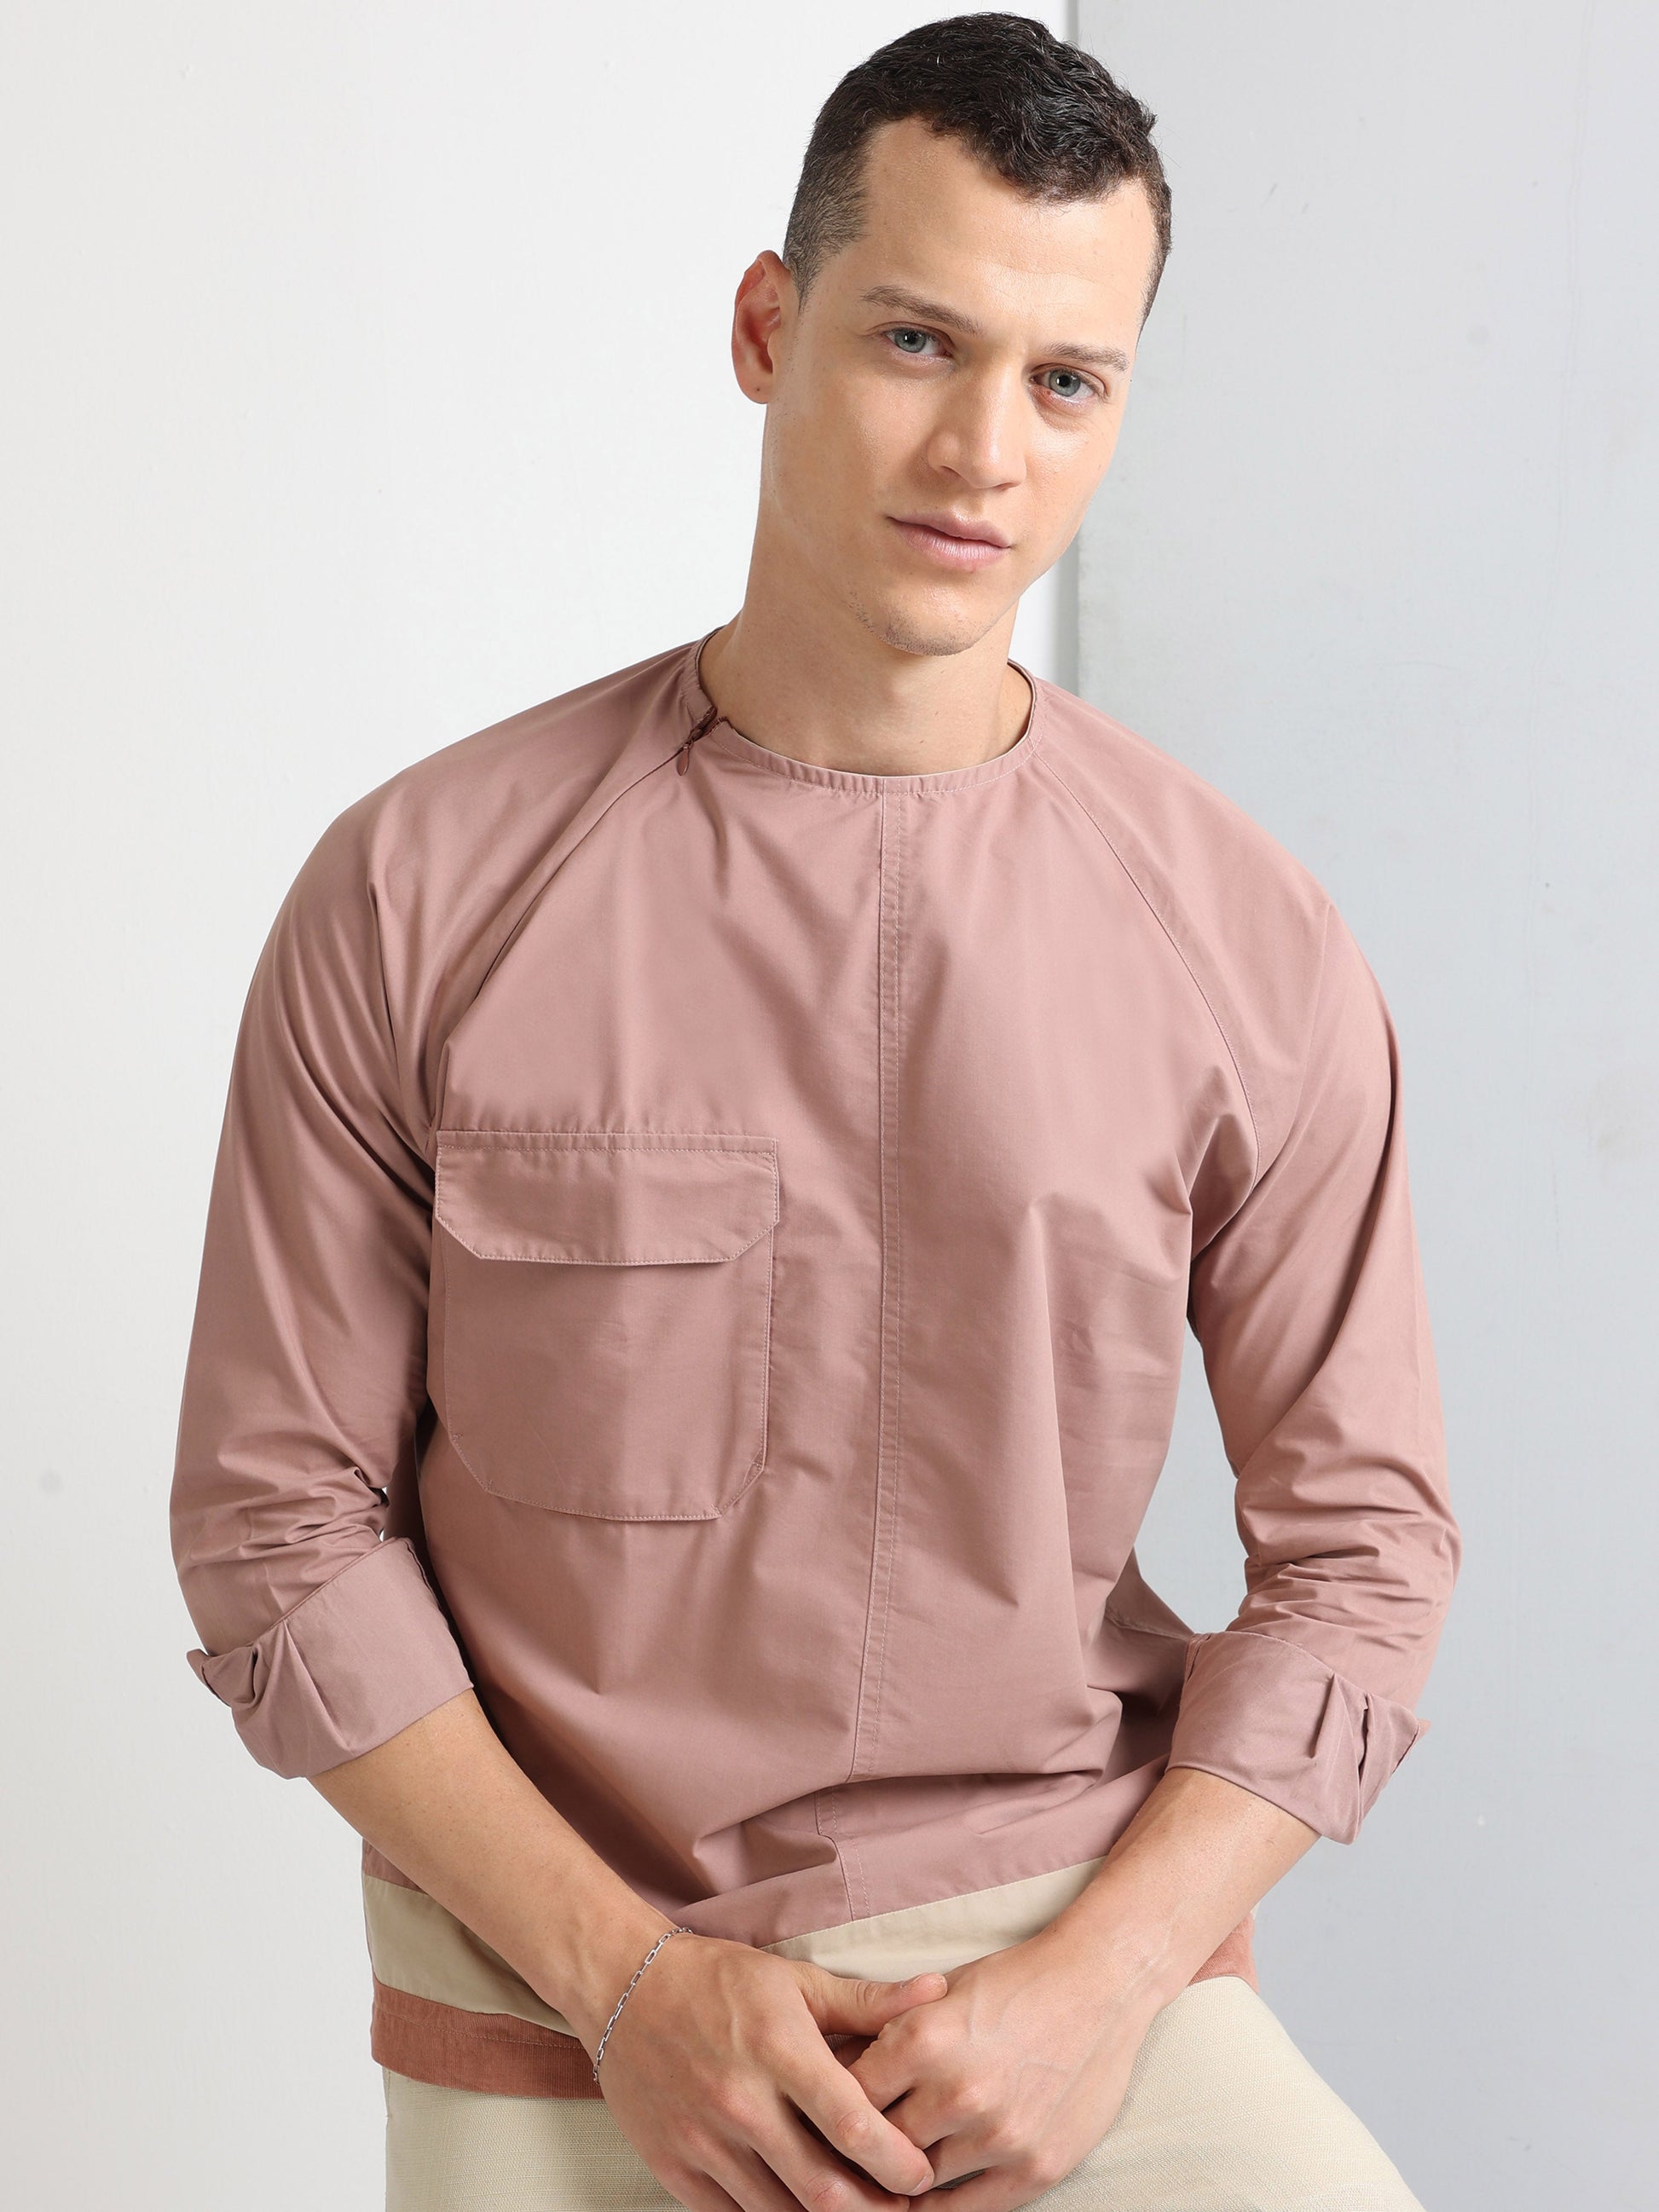 Buy Raglan Crew Neck Flap Pocket Stylish Shirt Online.